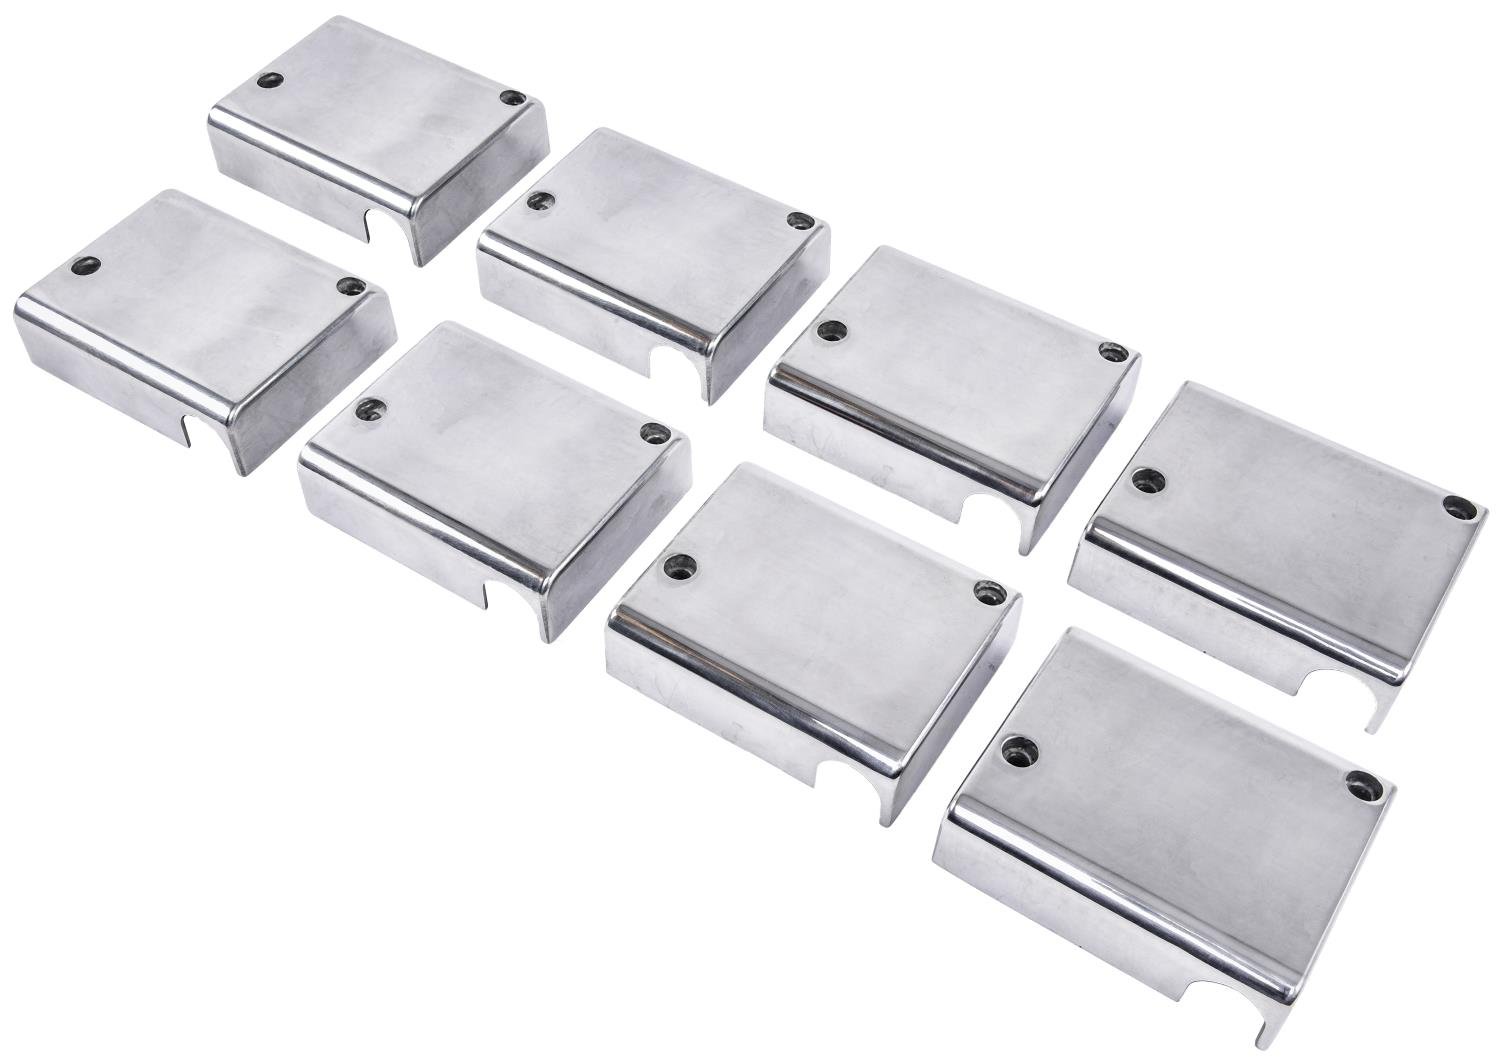 Aluminum Ignition Coil Cover Set for 5.7L, 6.1L, 6.4L Gen III Hemi Engines [Polished Finish]